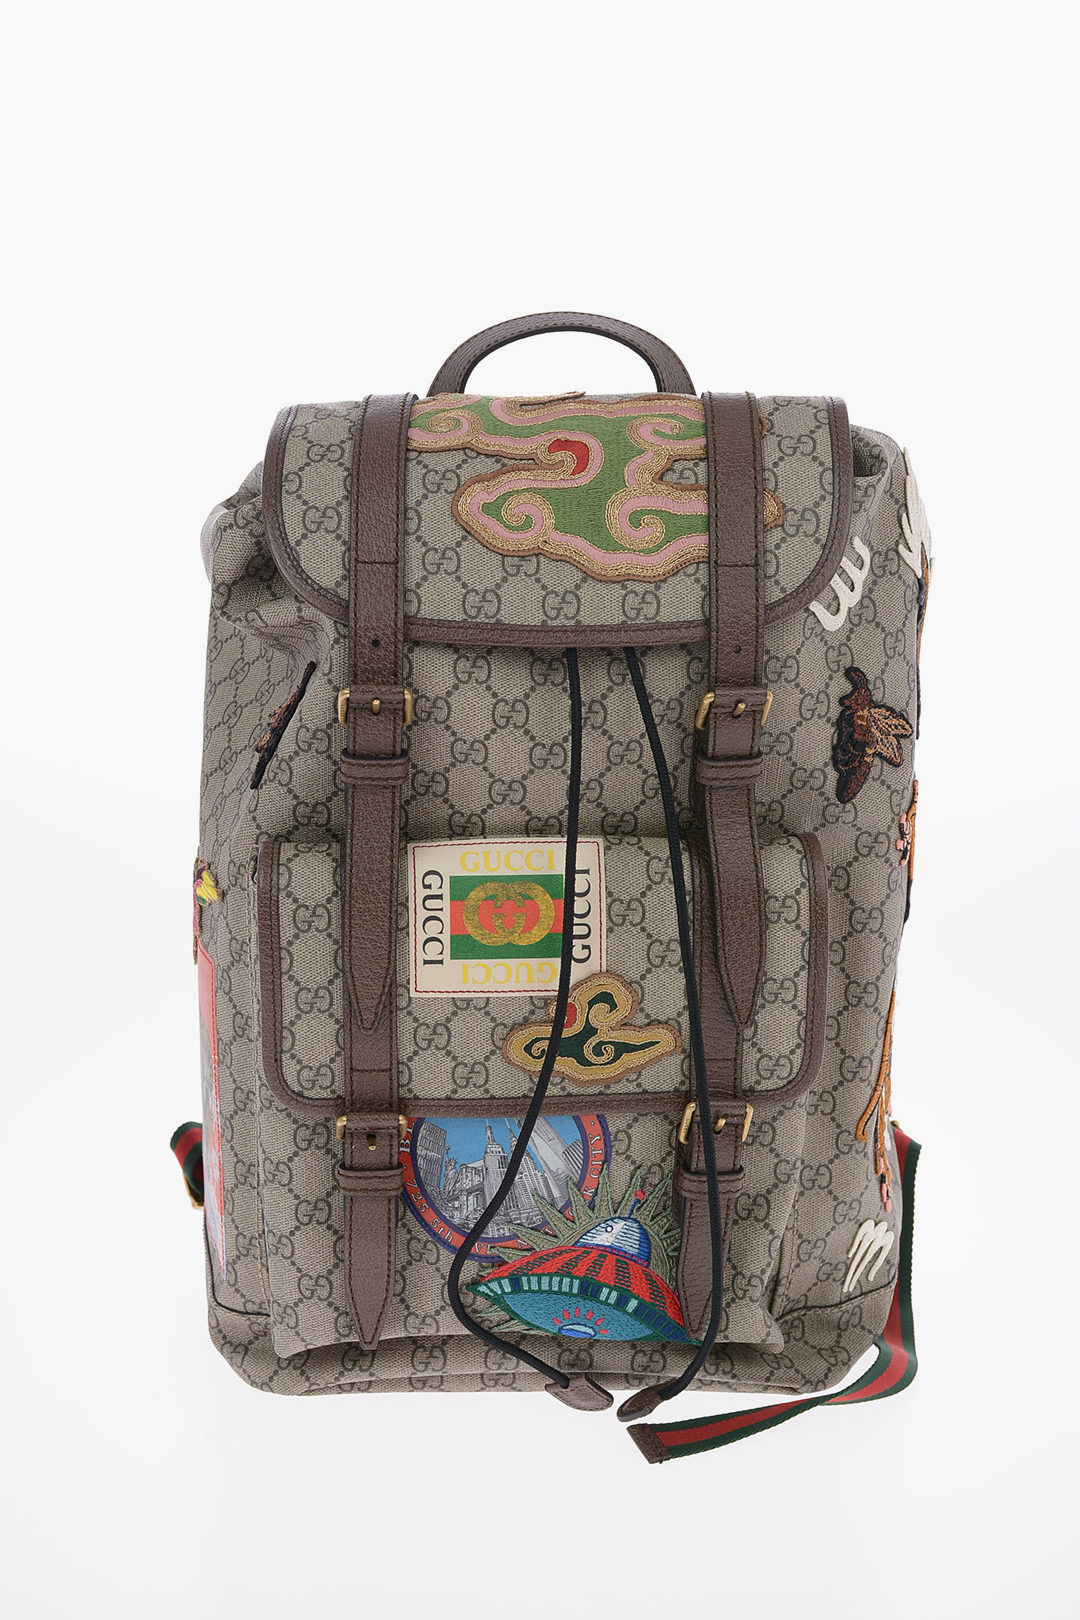 gucci classic backpack